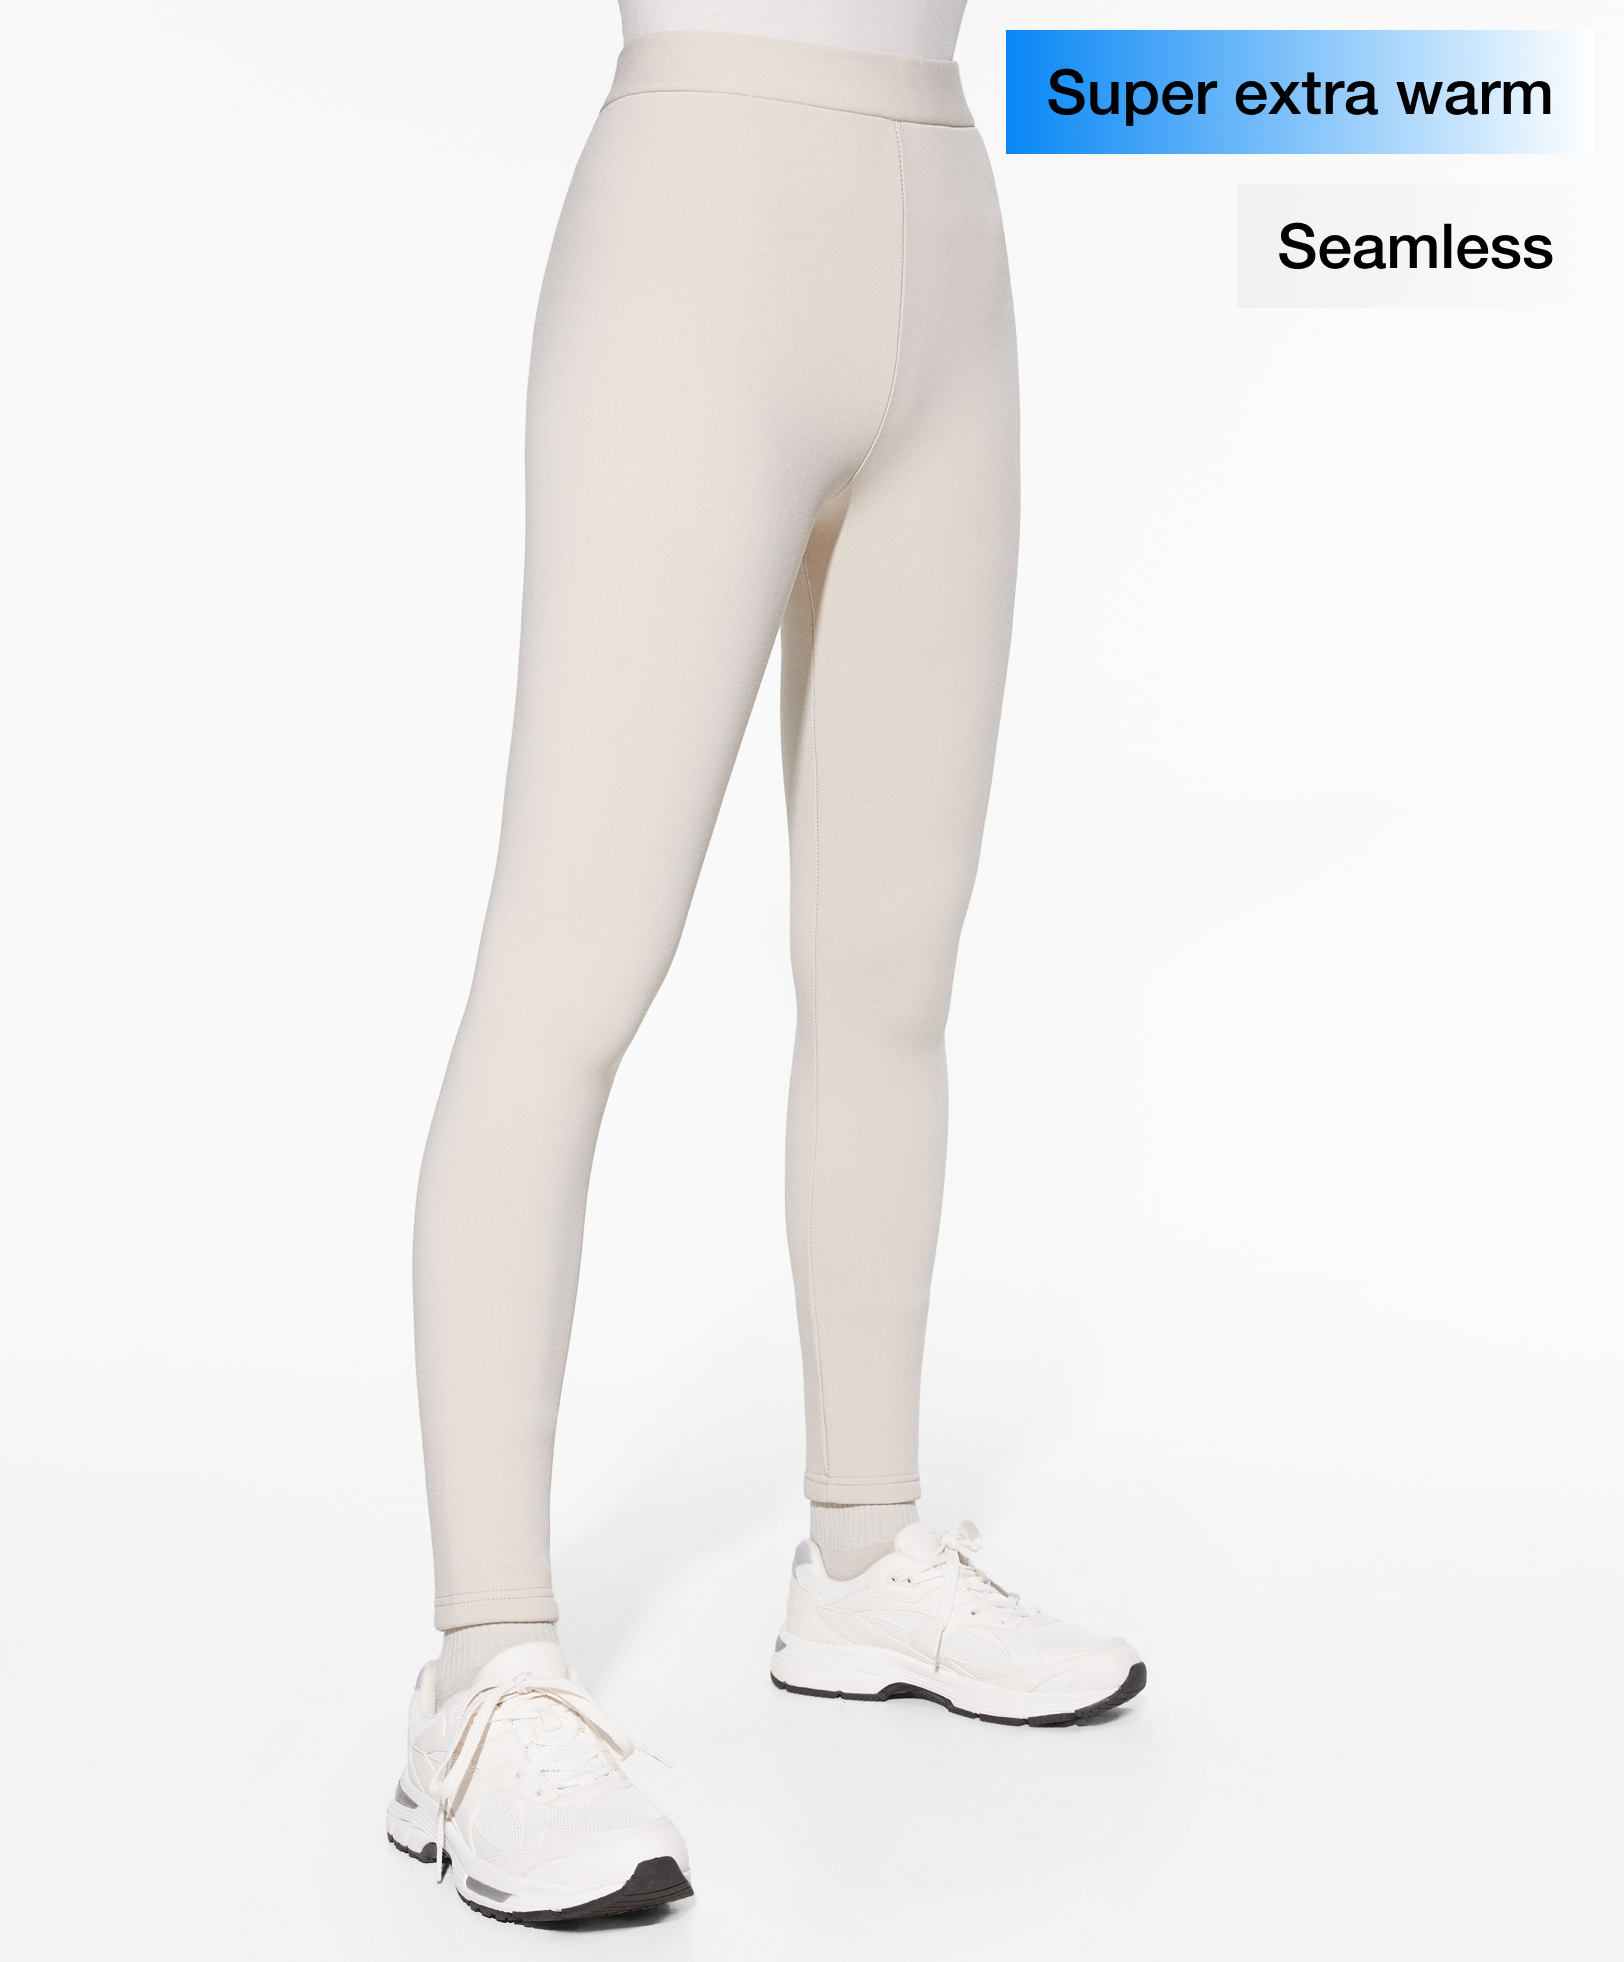 Super extra warm seamless 65cm ankle-length leggings